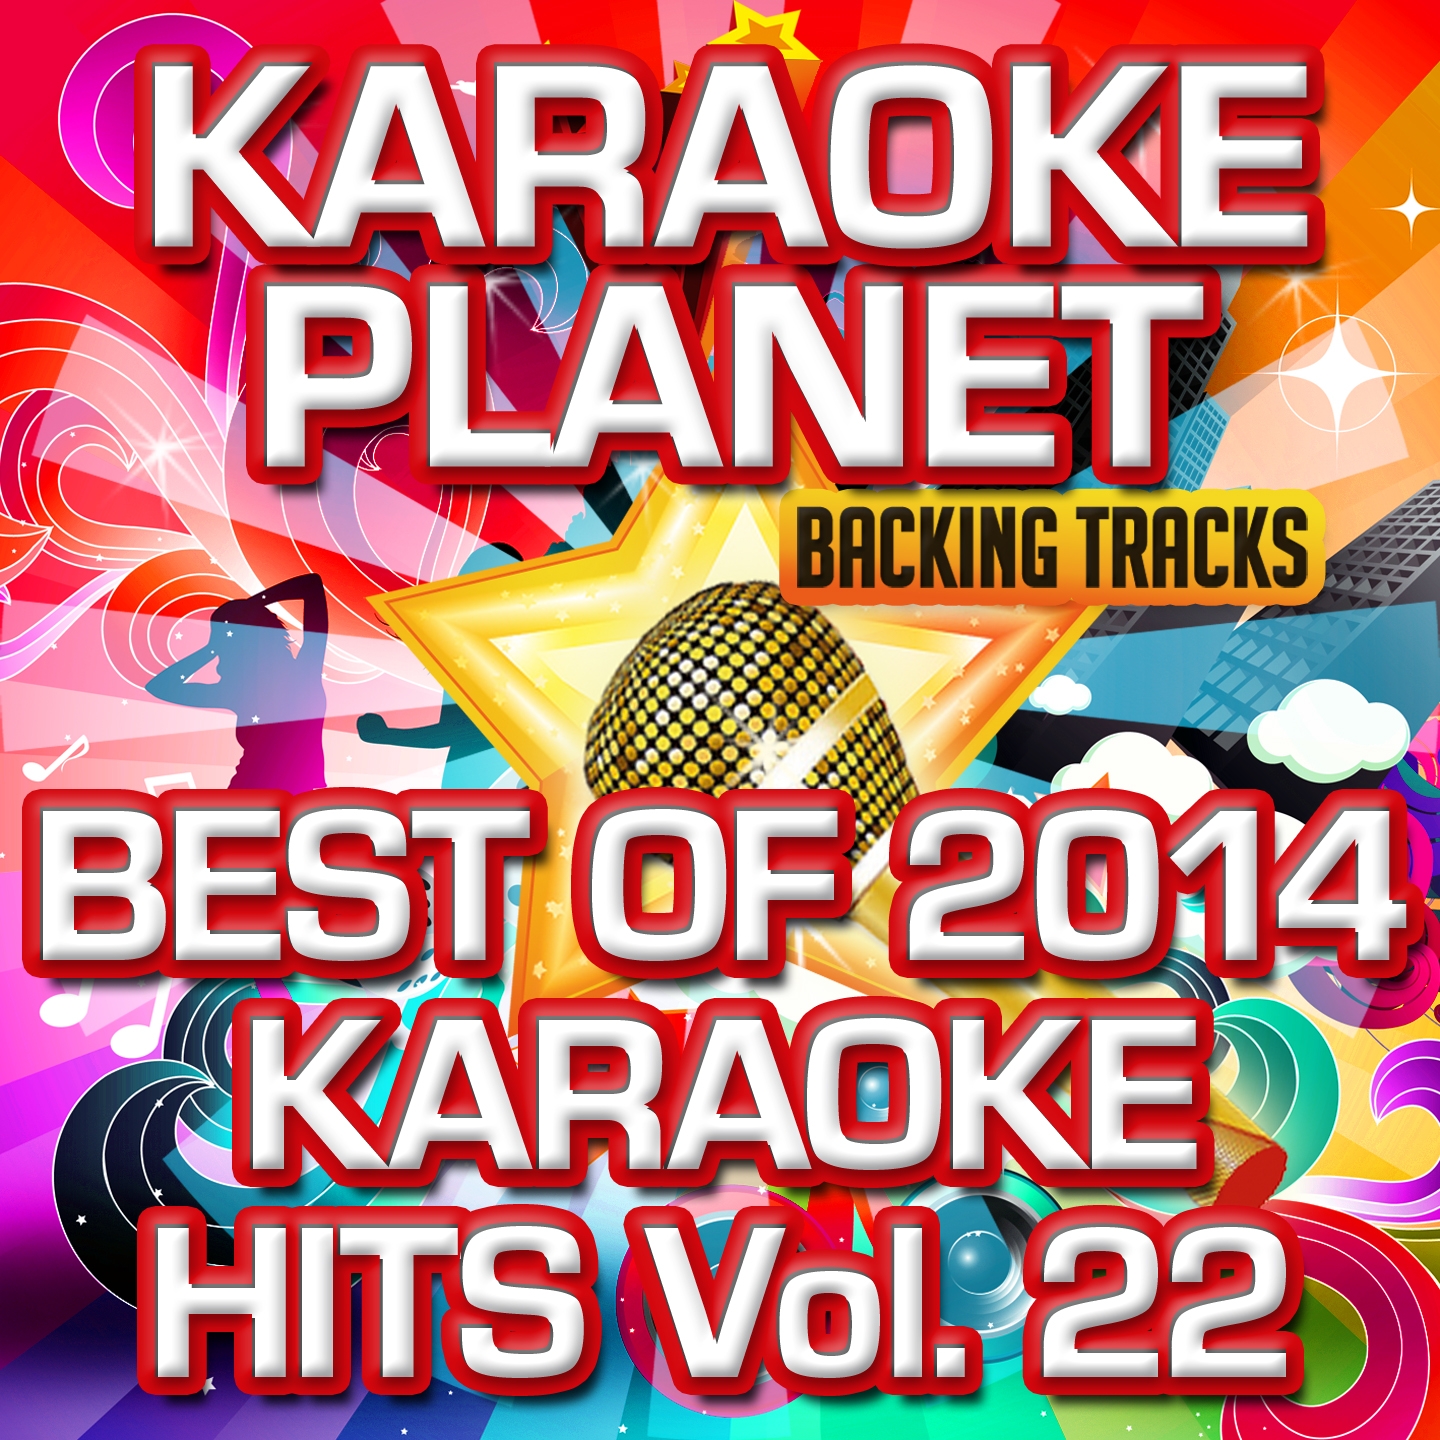 Best of 2014 Karaoke Hits, Vol. 22